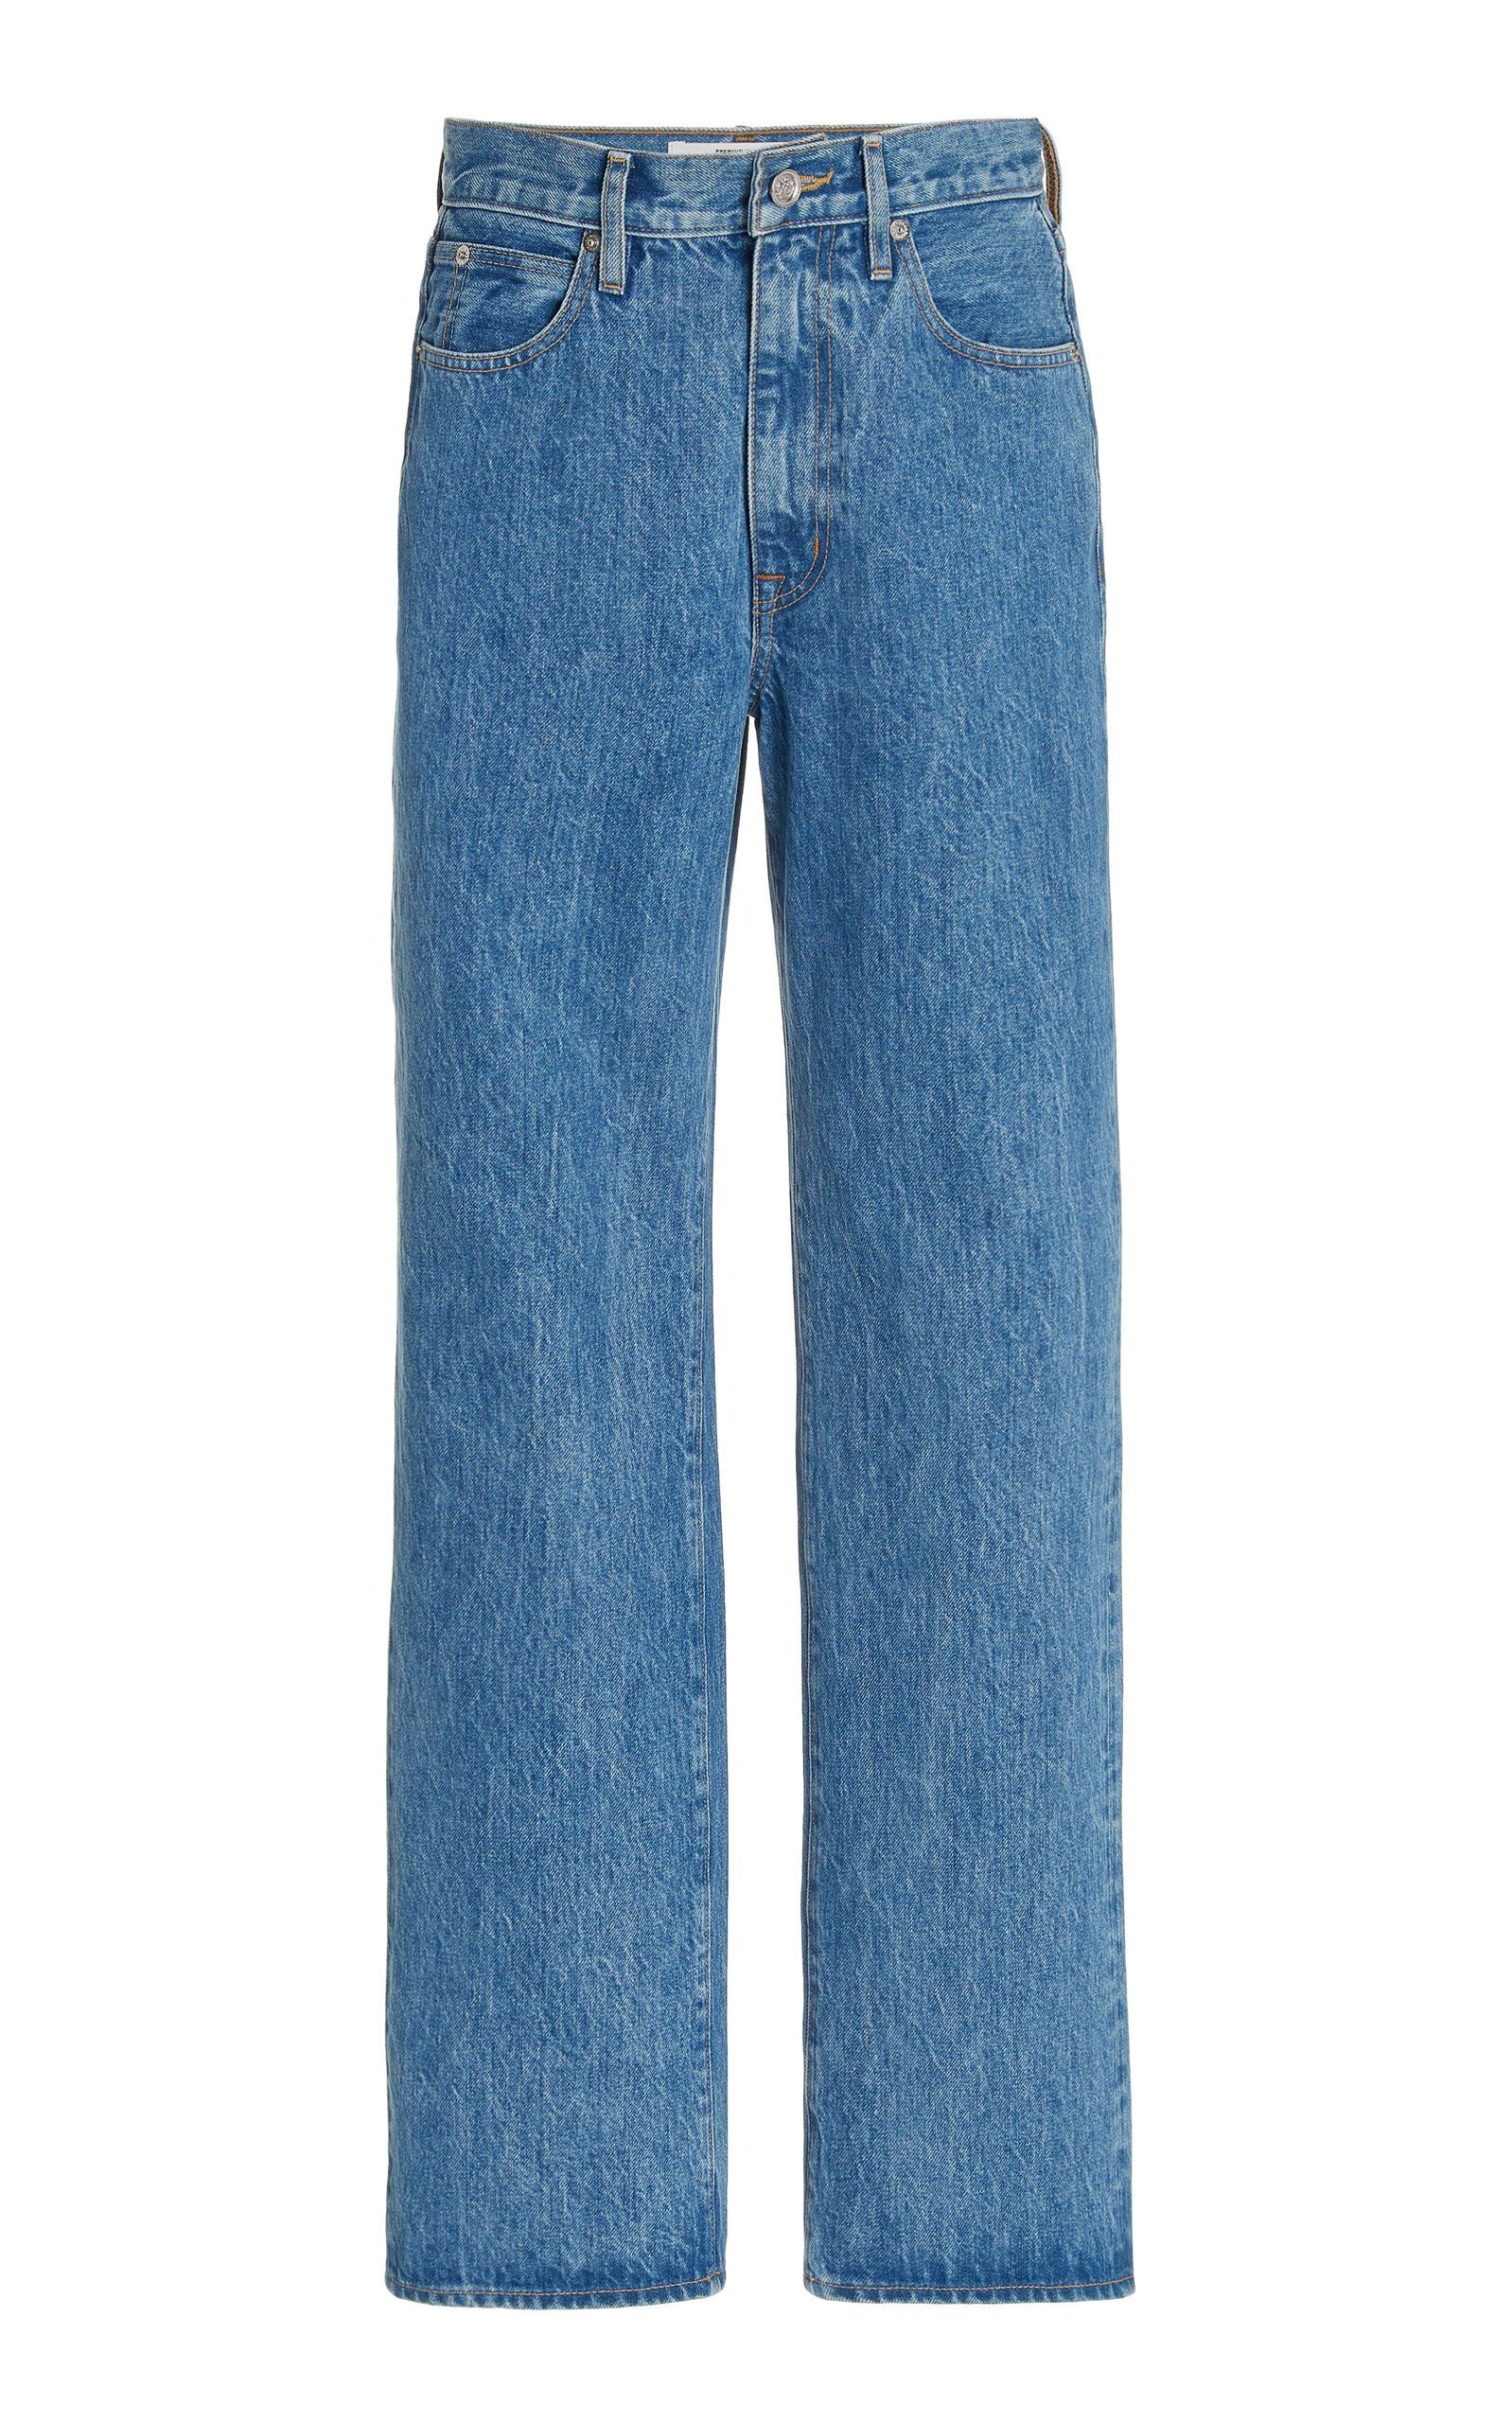 Blue 40                  EU discount 70% NoName straight jeans WOMEN FASHION Jeans Basic 